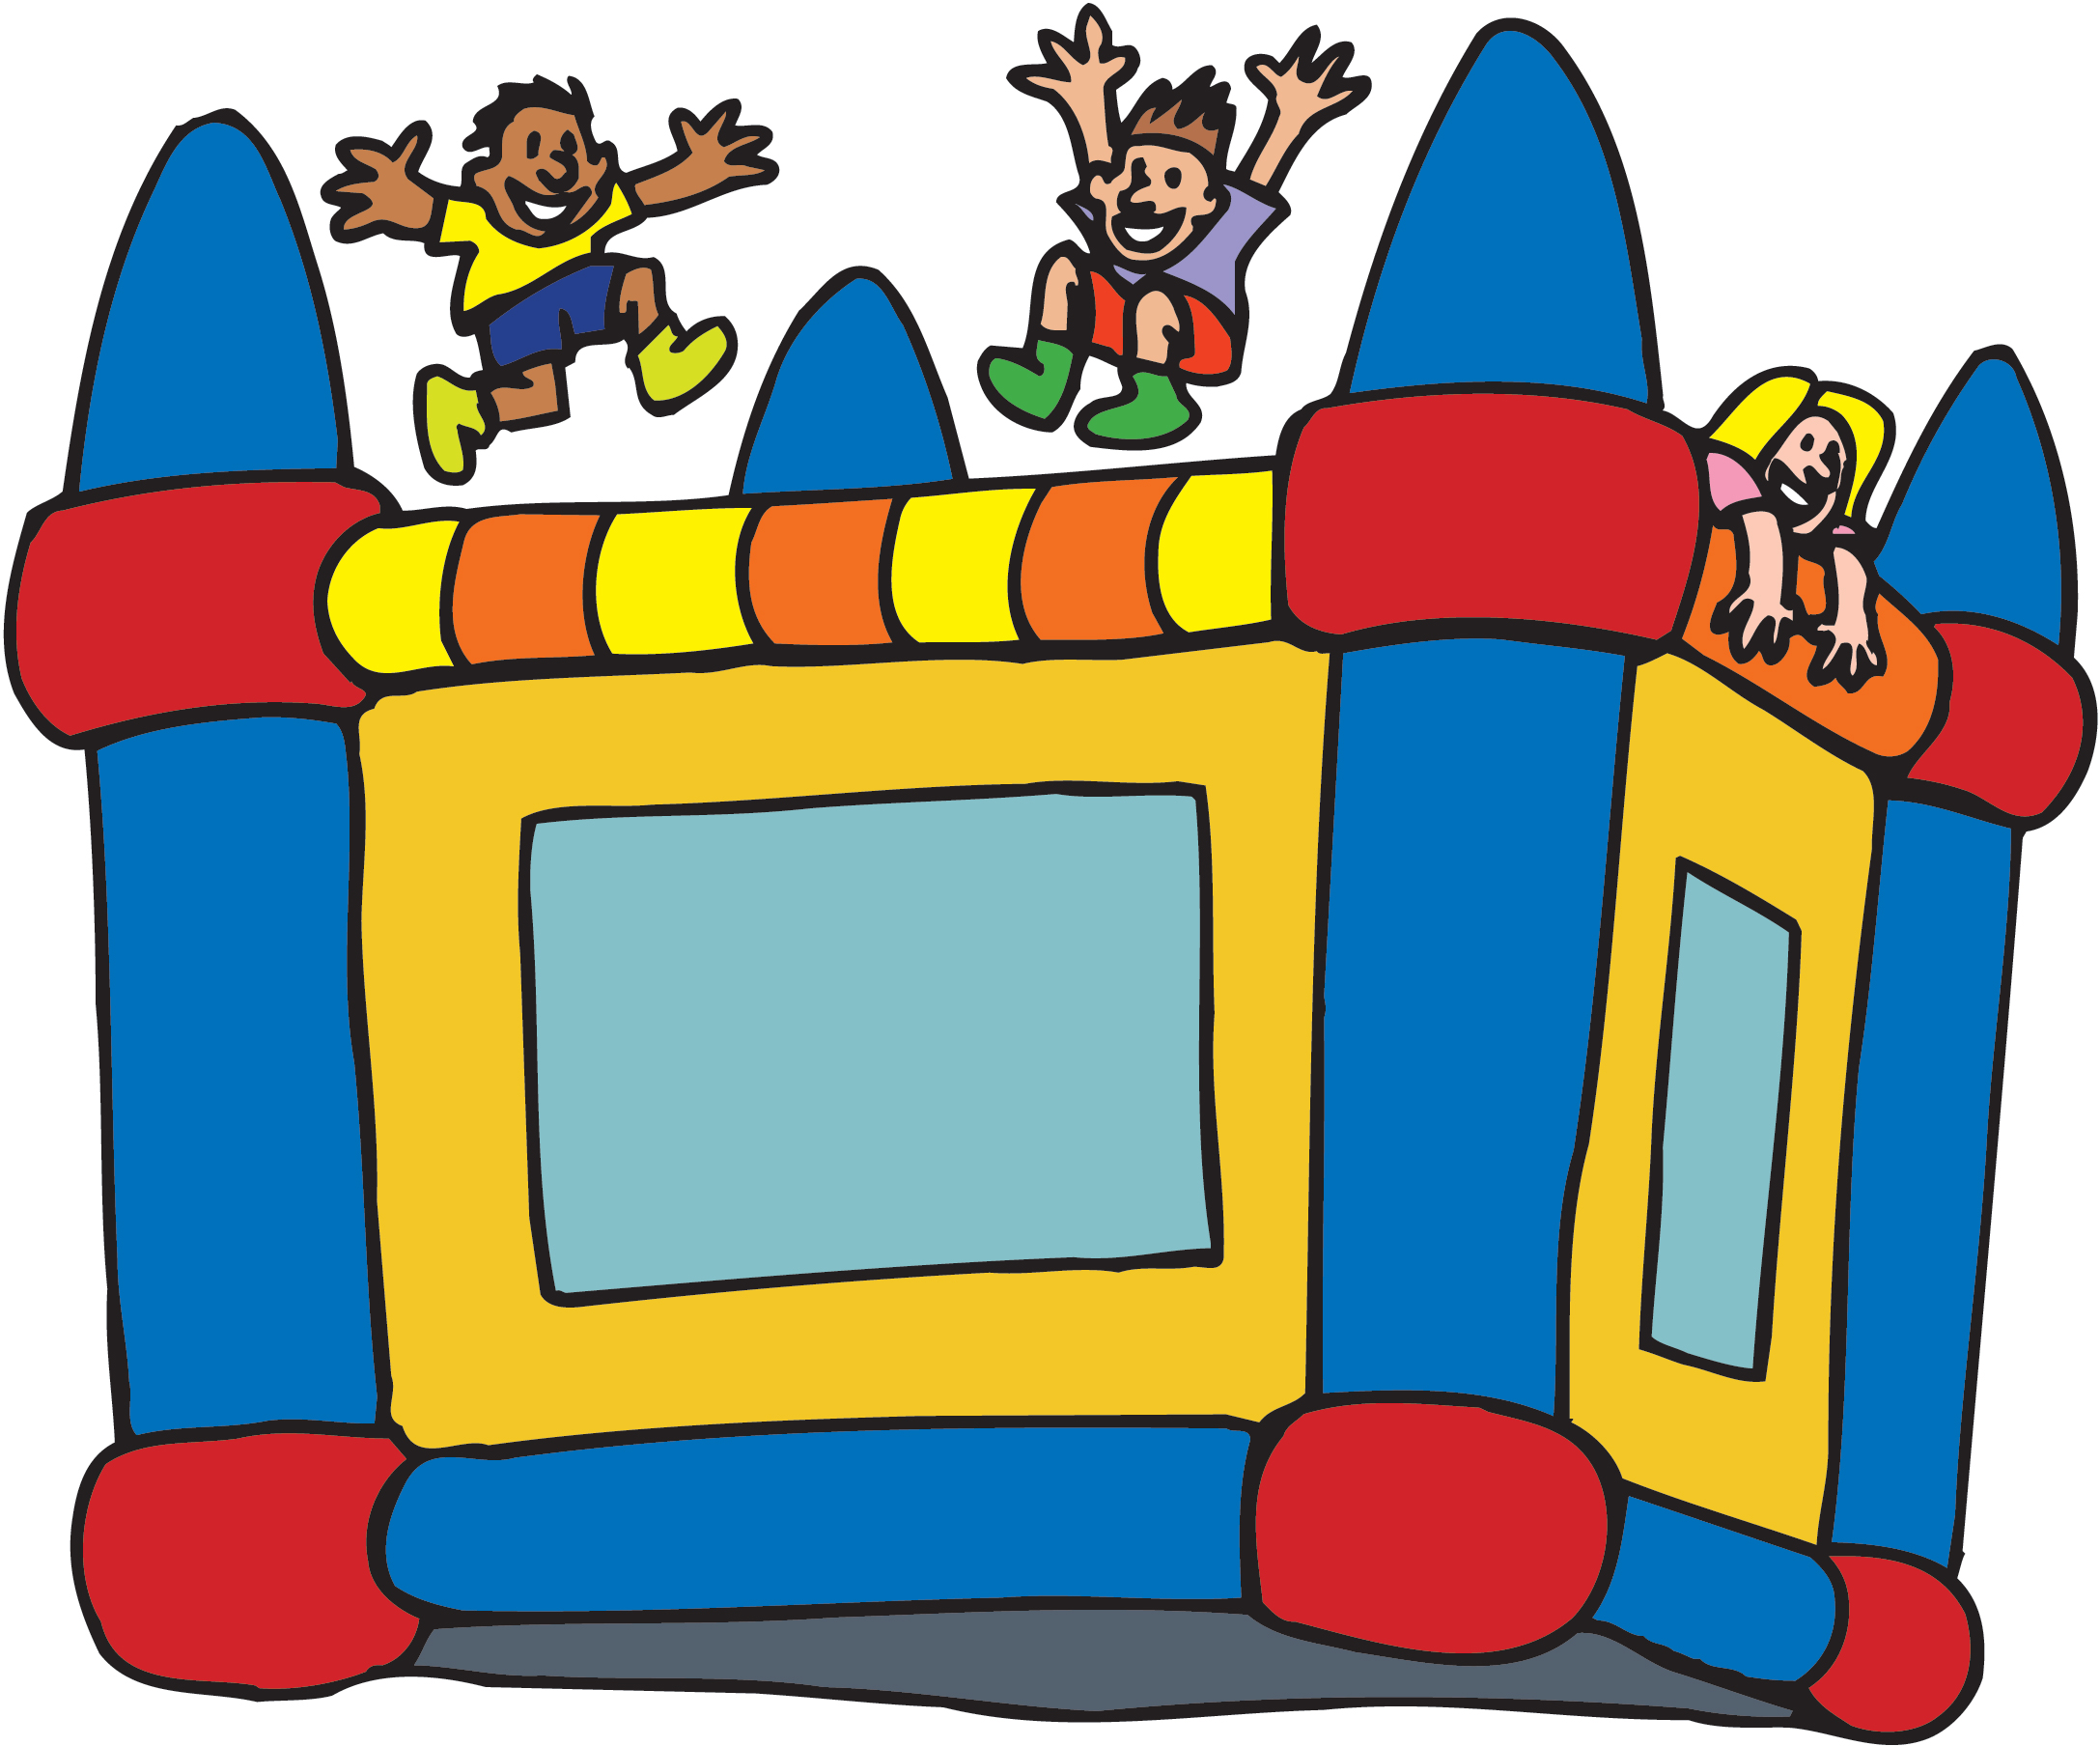 Bouncy castle clipart kid